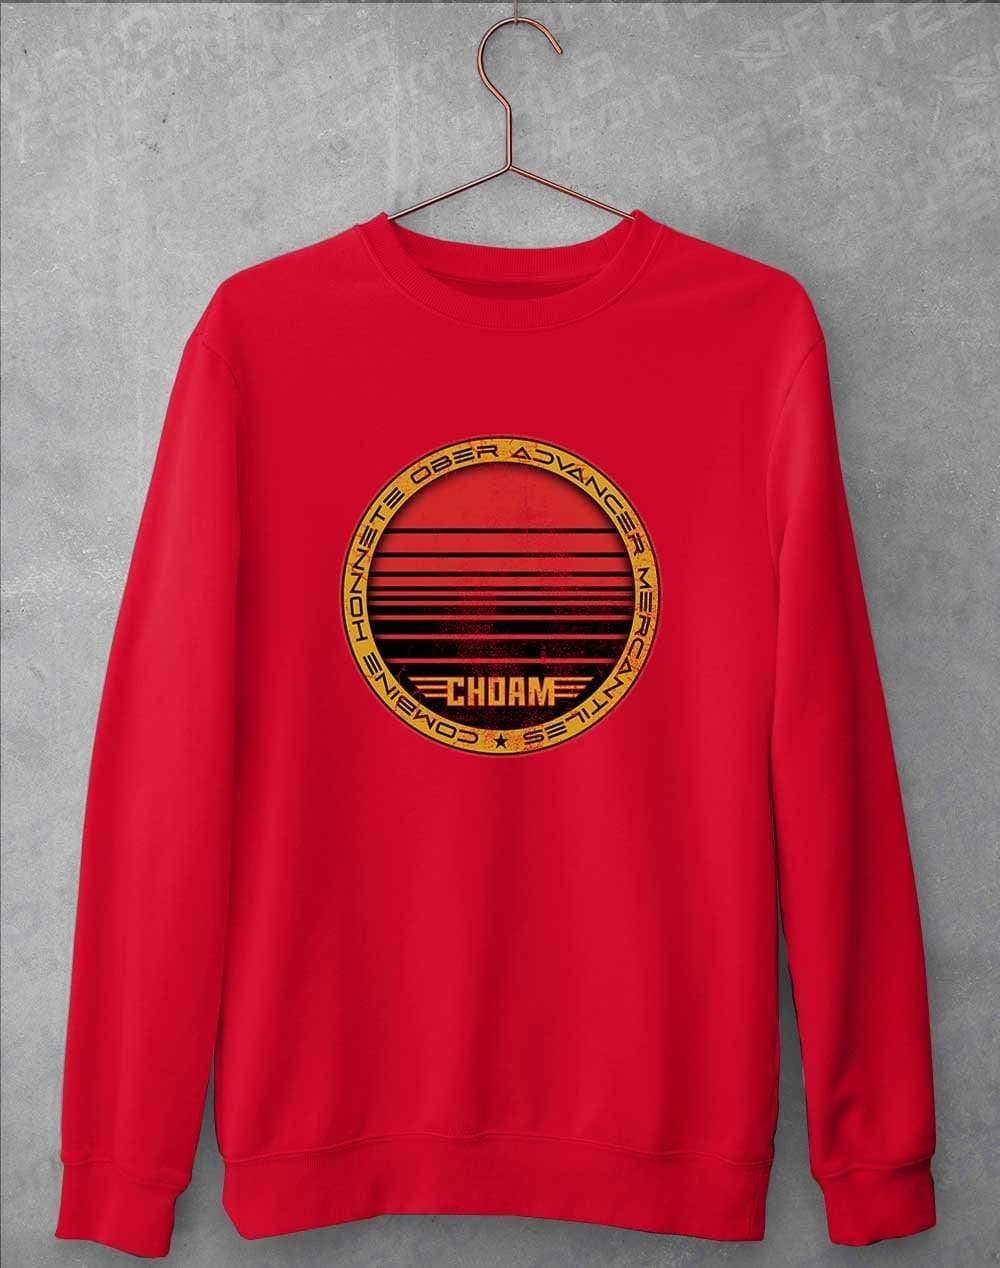 CHOAM Sweatshirt S / Red  - Off World Tees